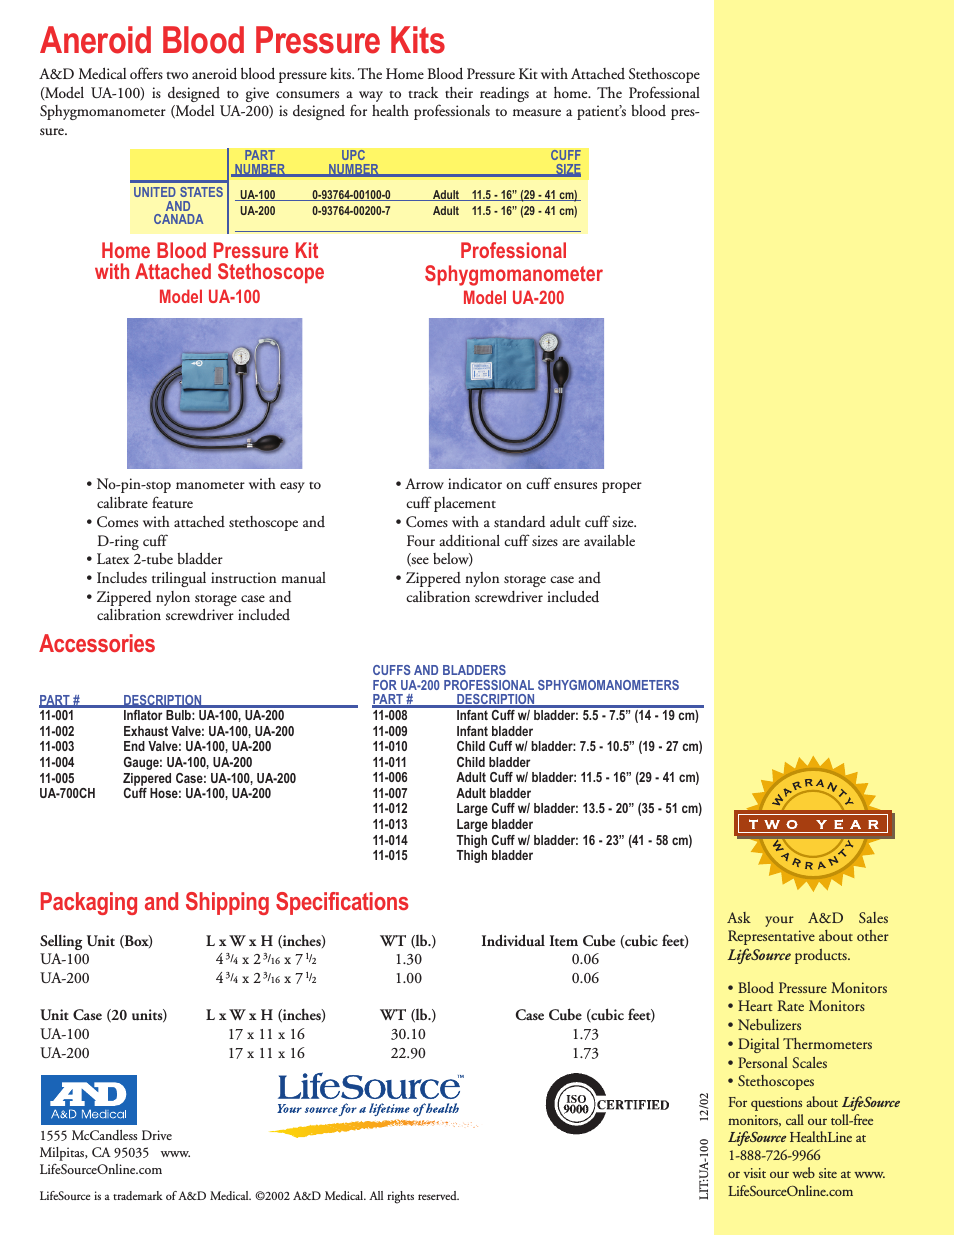 Aneroid Blood Pressure Kit UA-200 (Page 2)